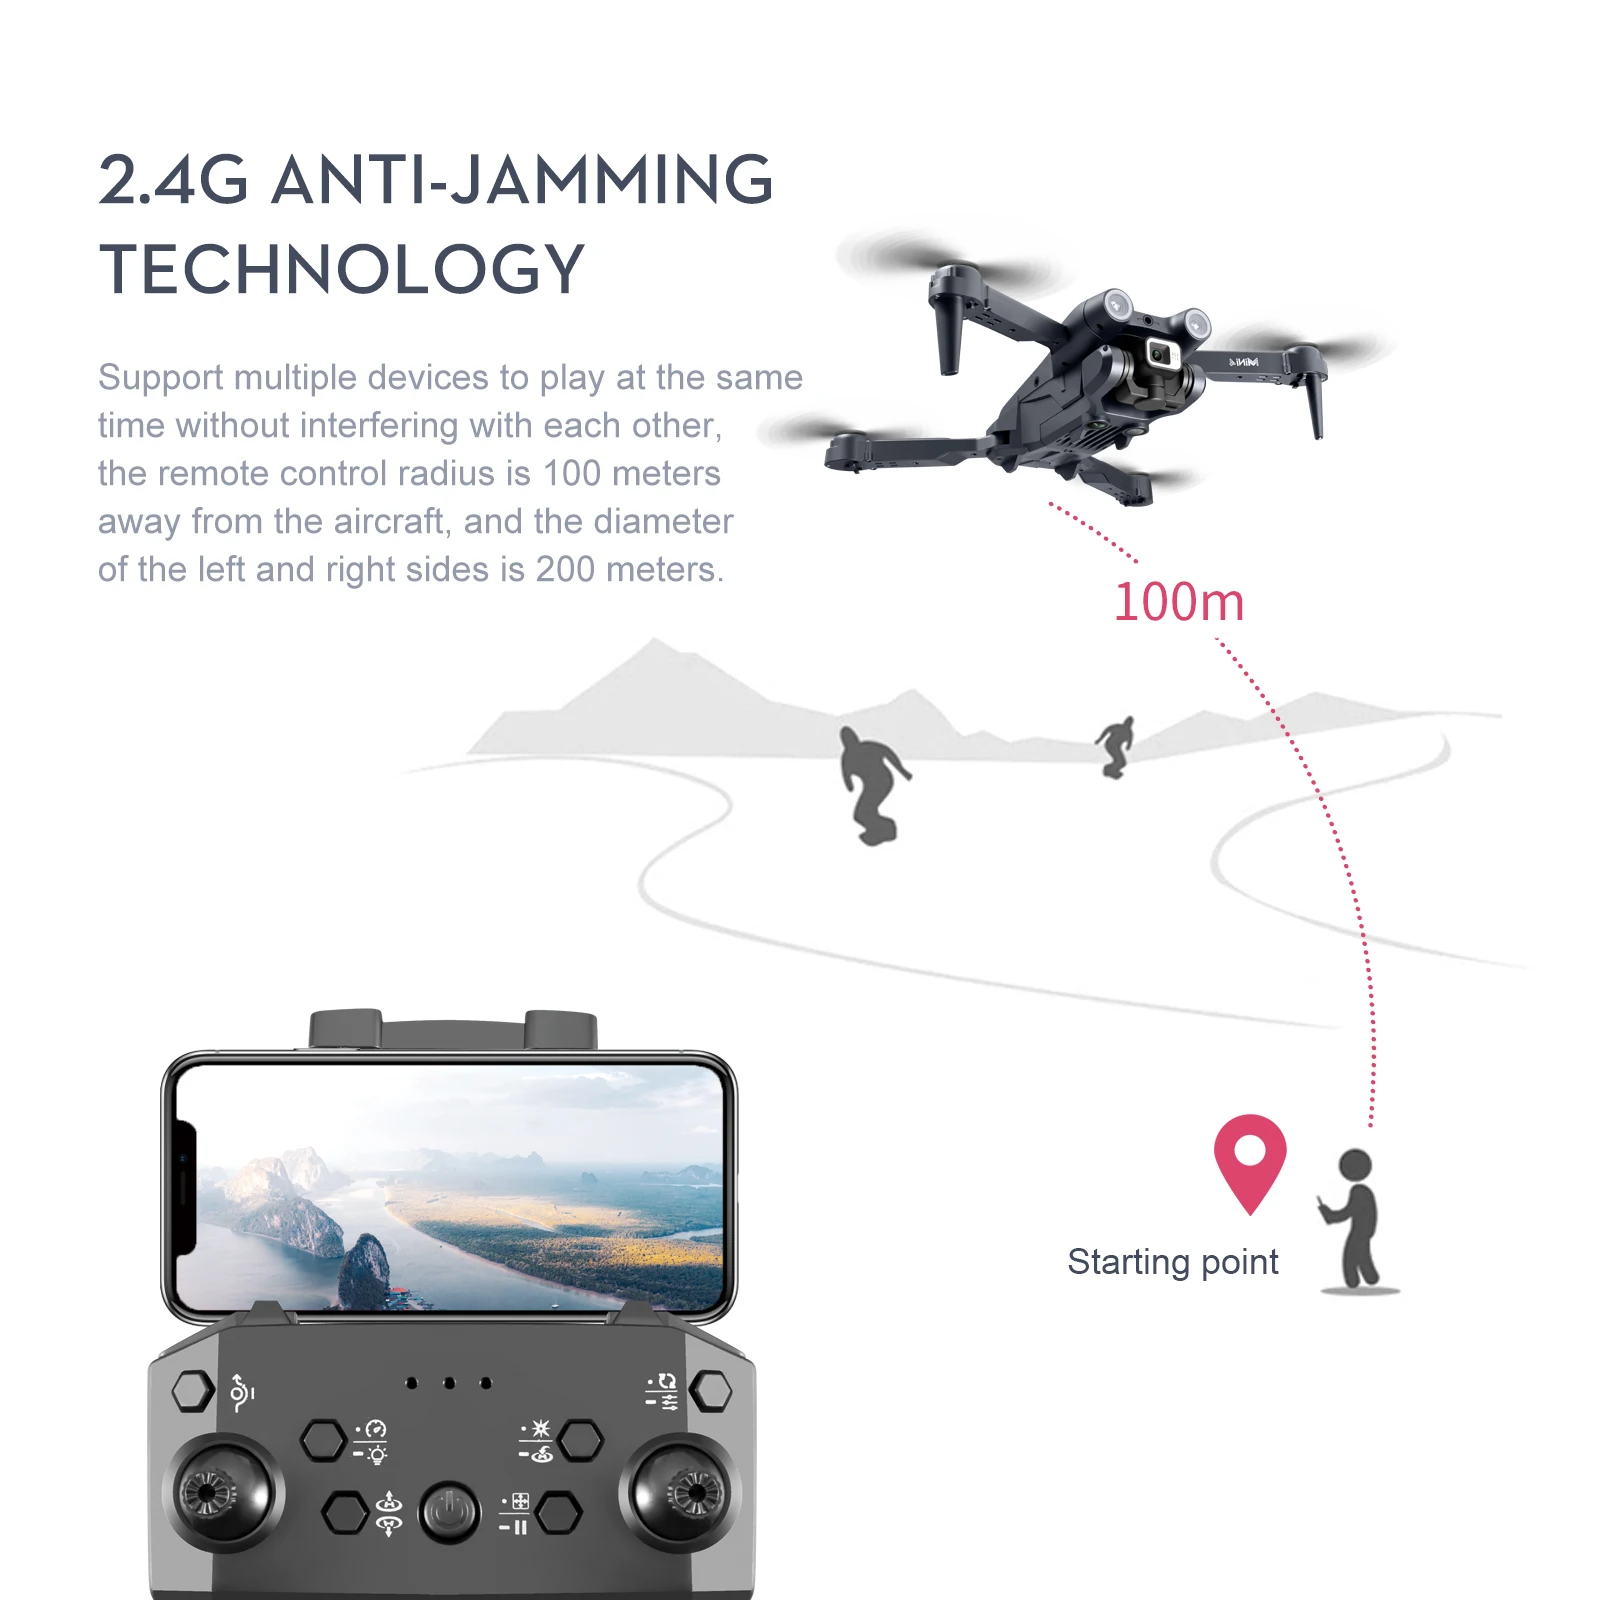 KBDFA MINI4 Drone, 2.4g anti-jamming technology iik support